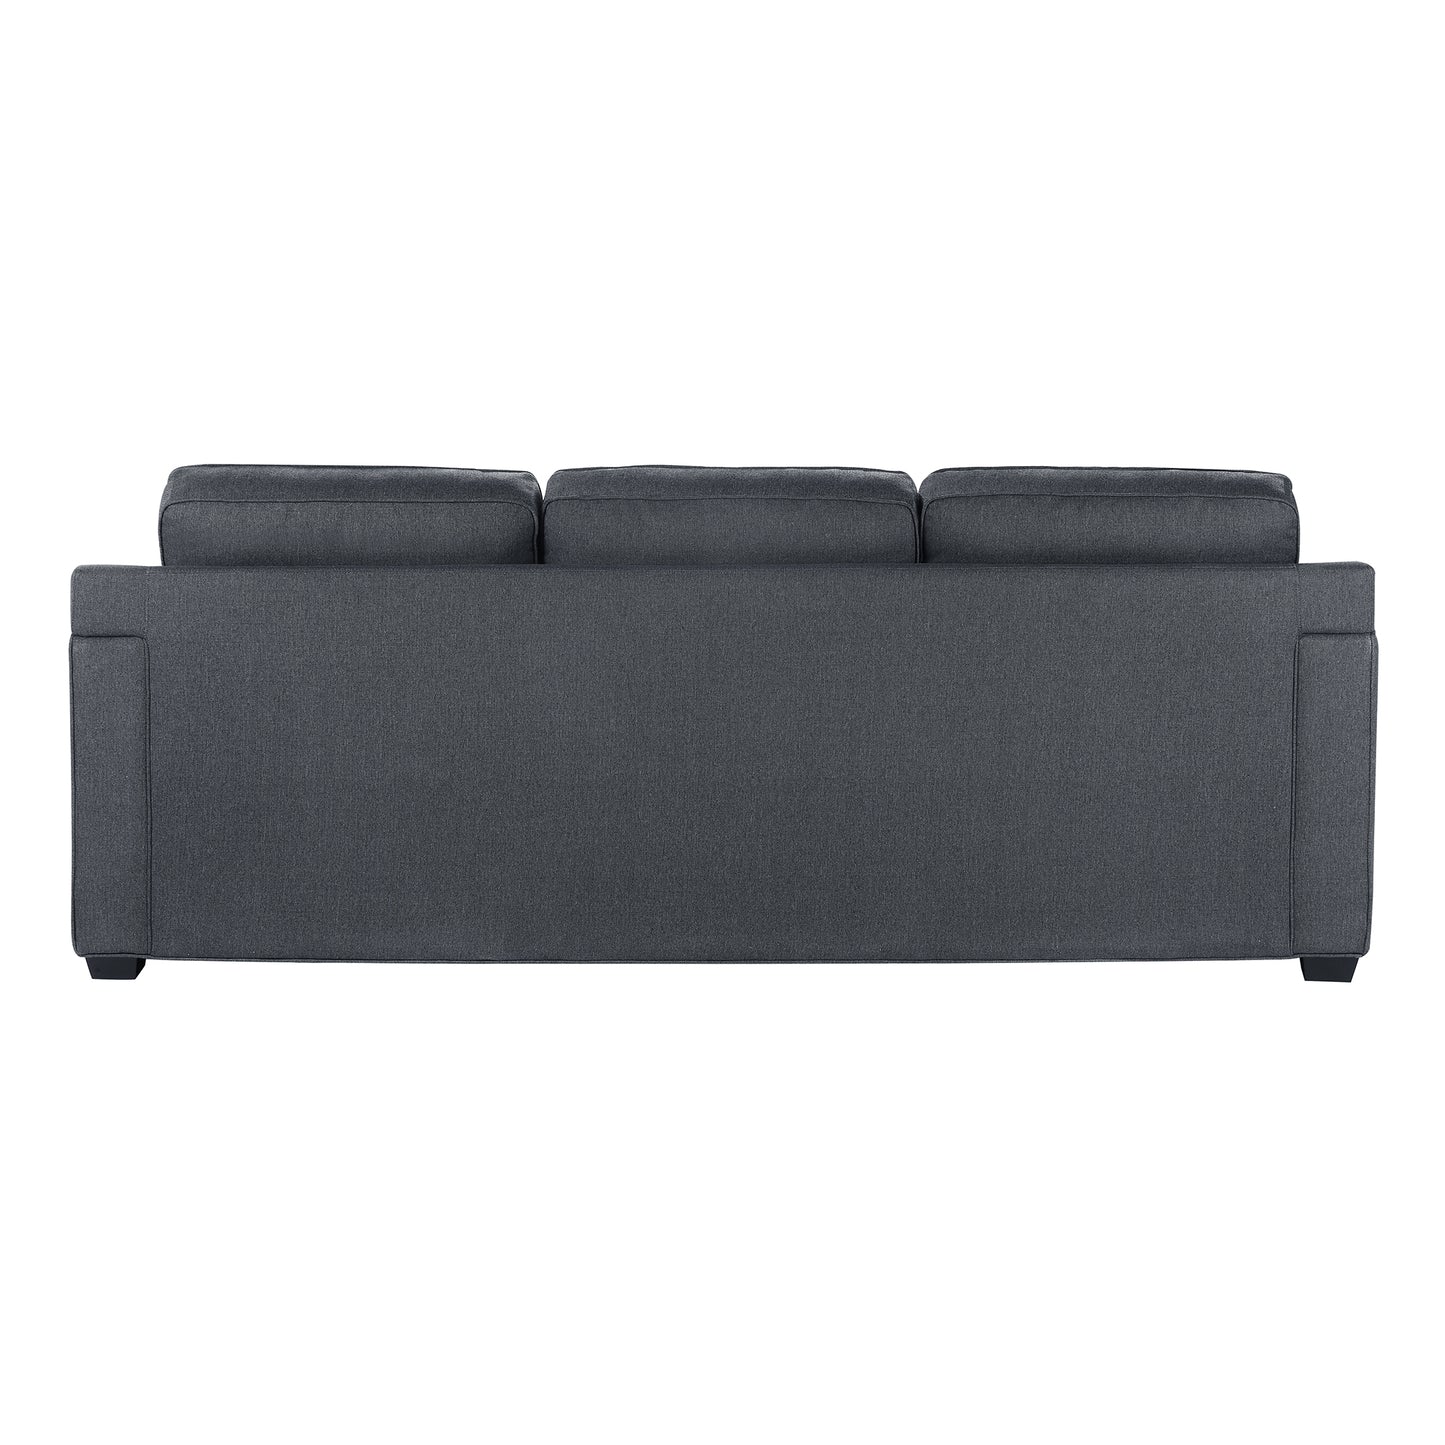 L Shape Sofa Set:- Hardwood Lounger Fabric Sofa Set ( Dark Grey)